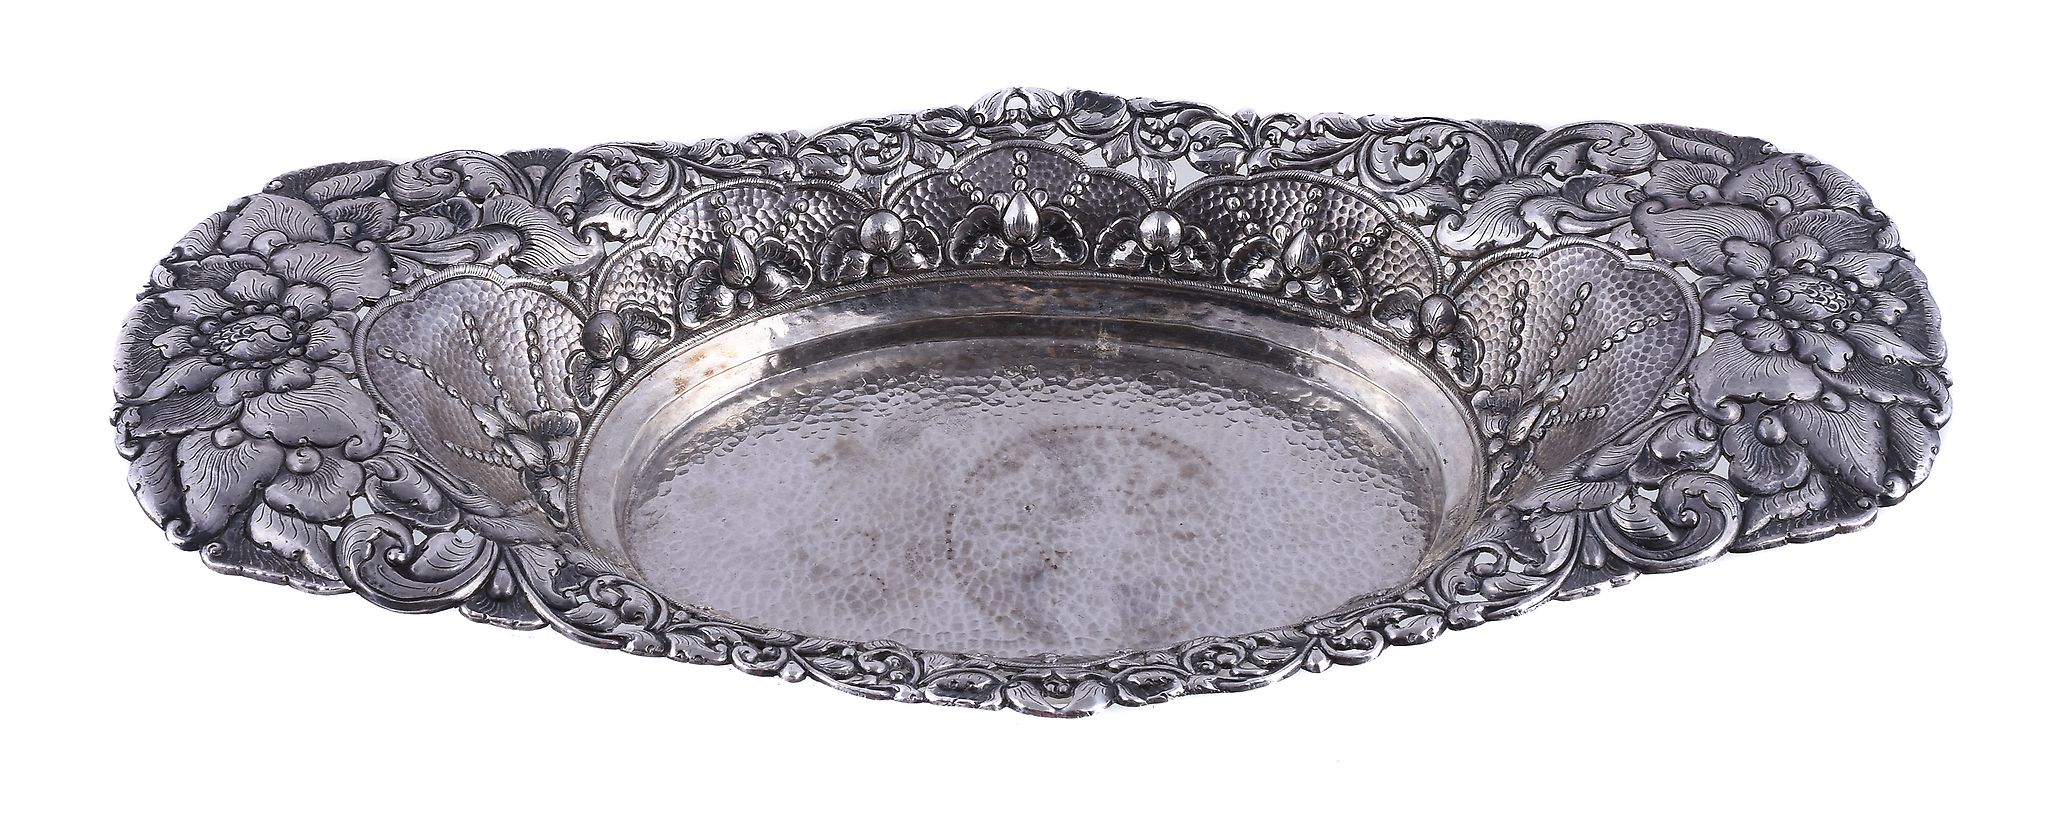 An Italian silver oblong basket, maker's mark MM, .800 standard, circa 1910, the everted rim